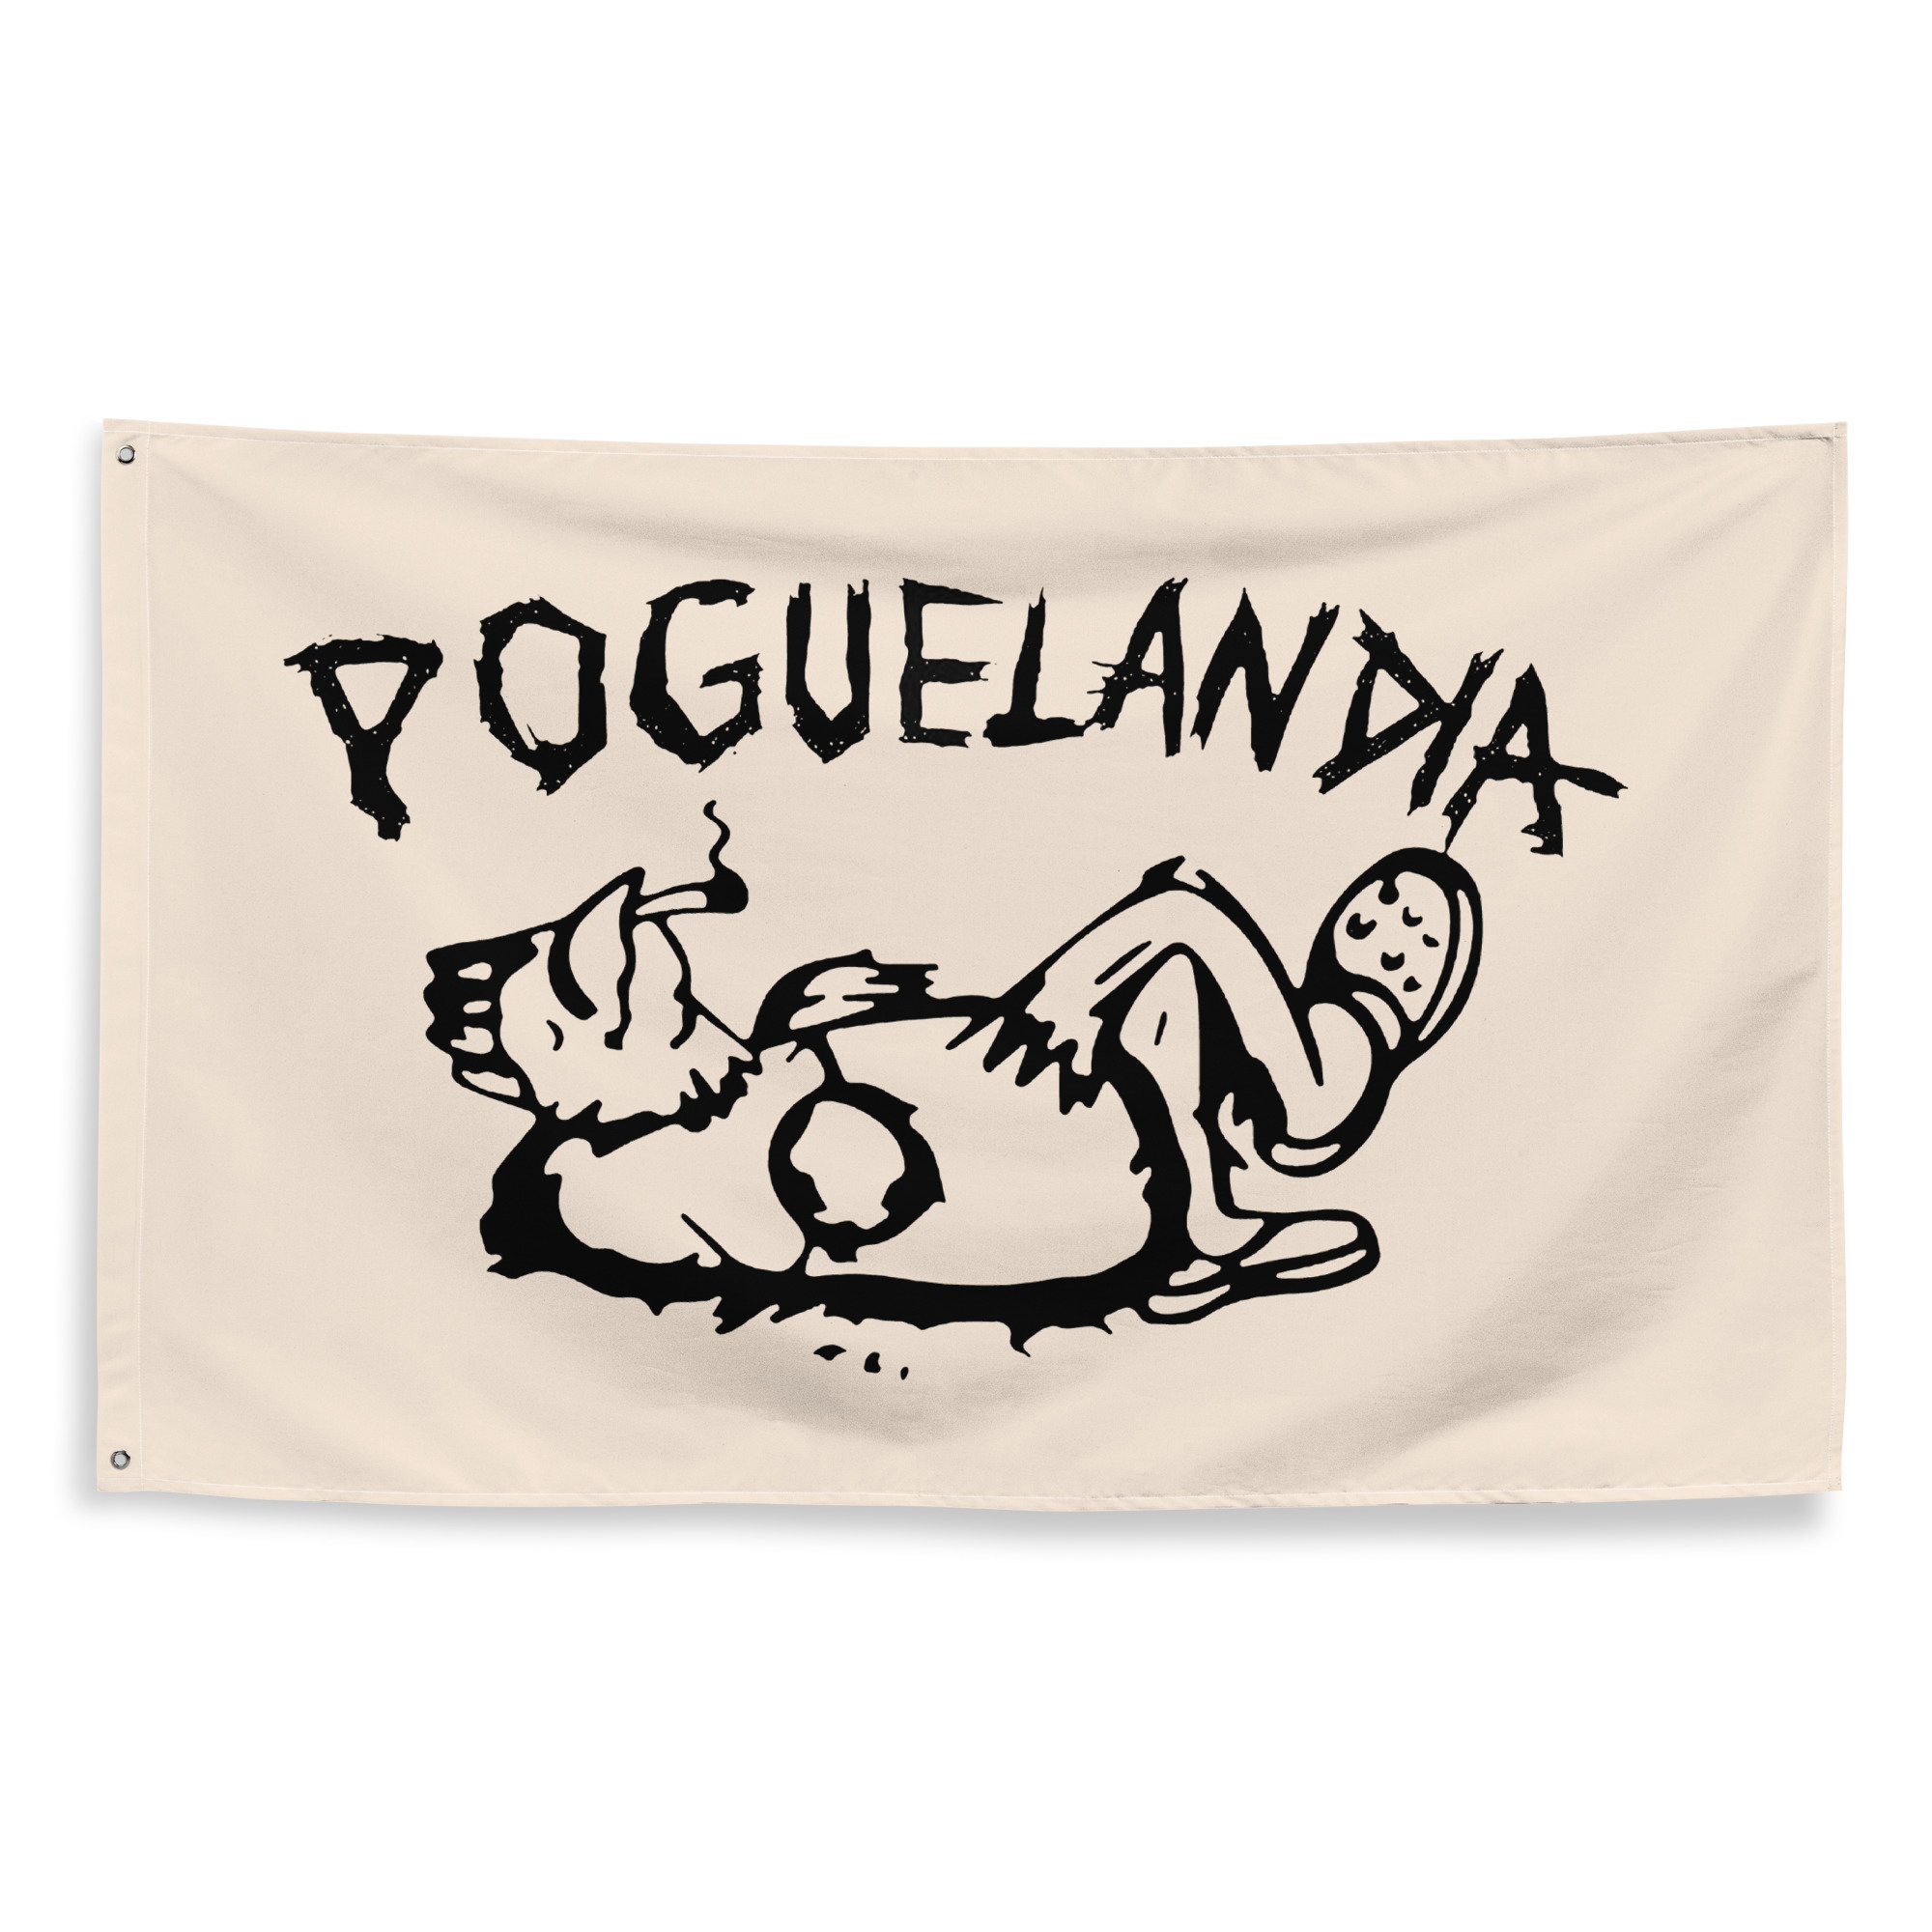 Poguelandia Flag, Poguelandia Garage Room Banner, OBX Flag, Outer Banks NC  Flag, 3 X 5 Flag 